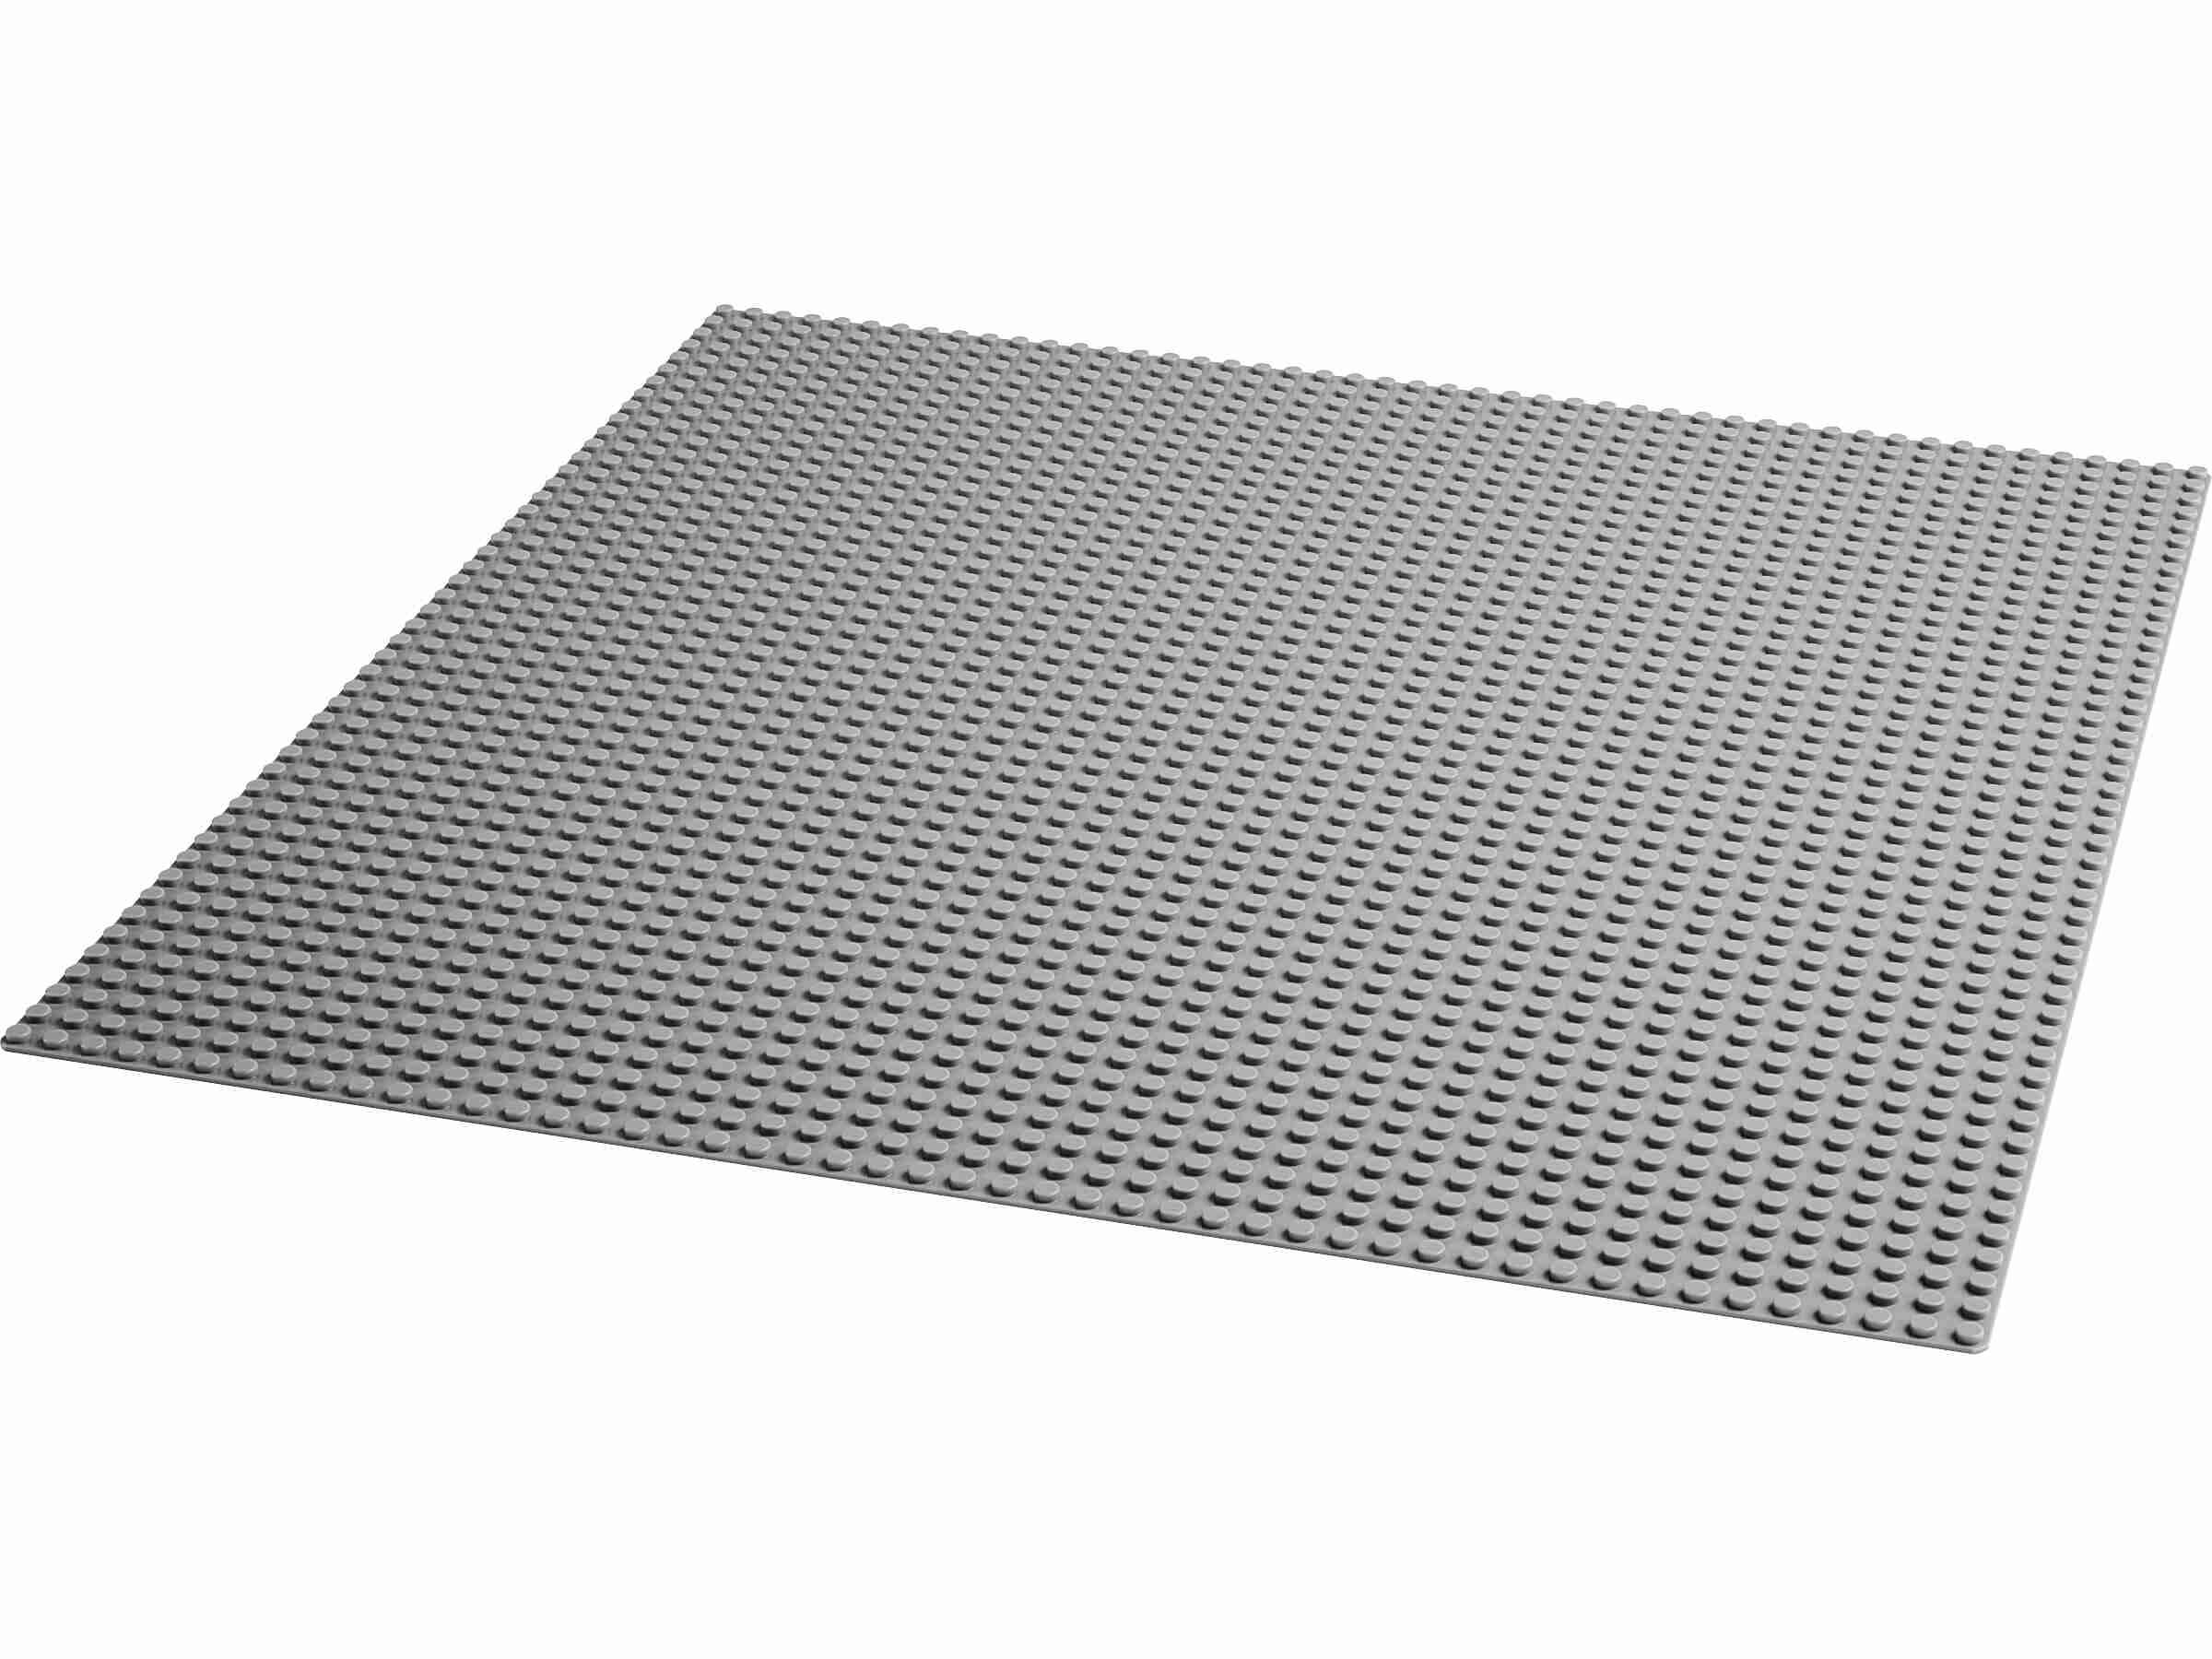 LEGO 11024 Classic Graue Bauplatte, quadratische Grundplatte mit 48x48 Noppen